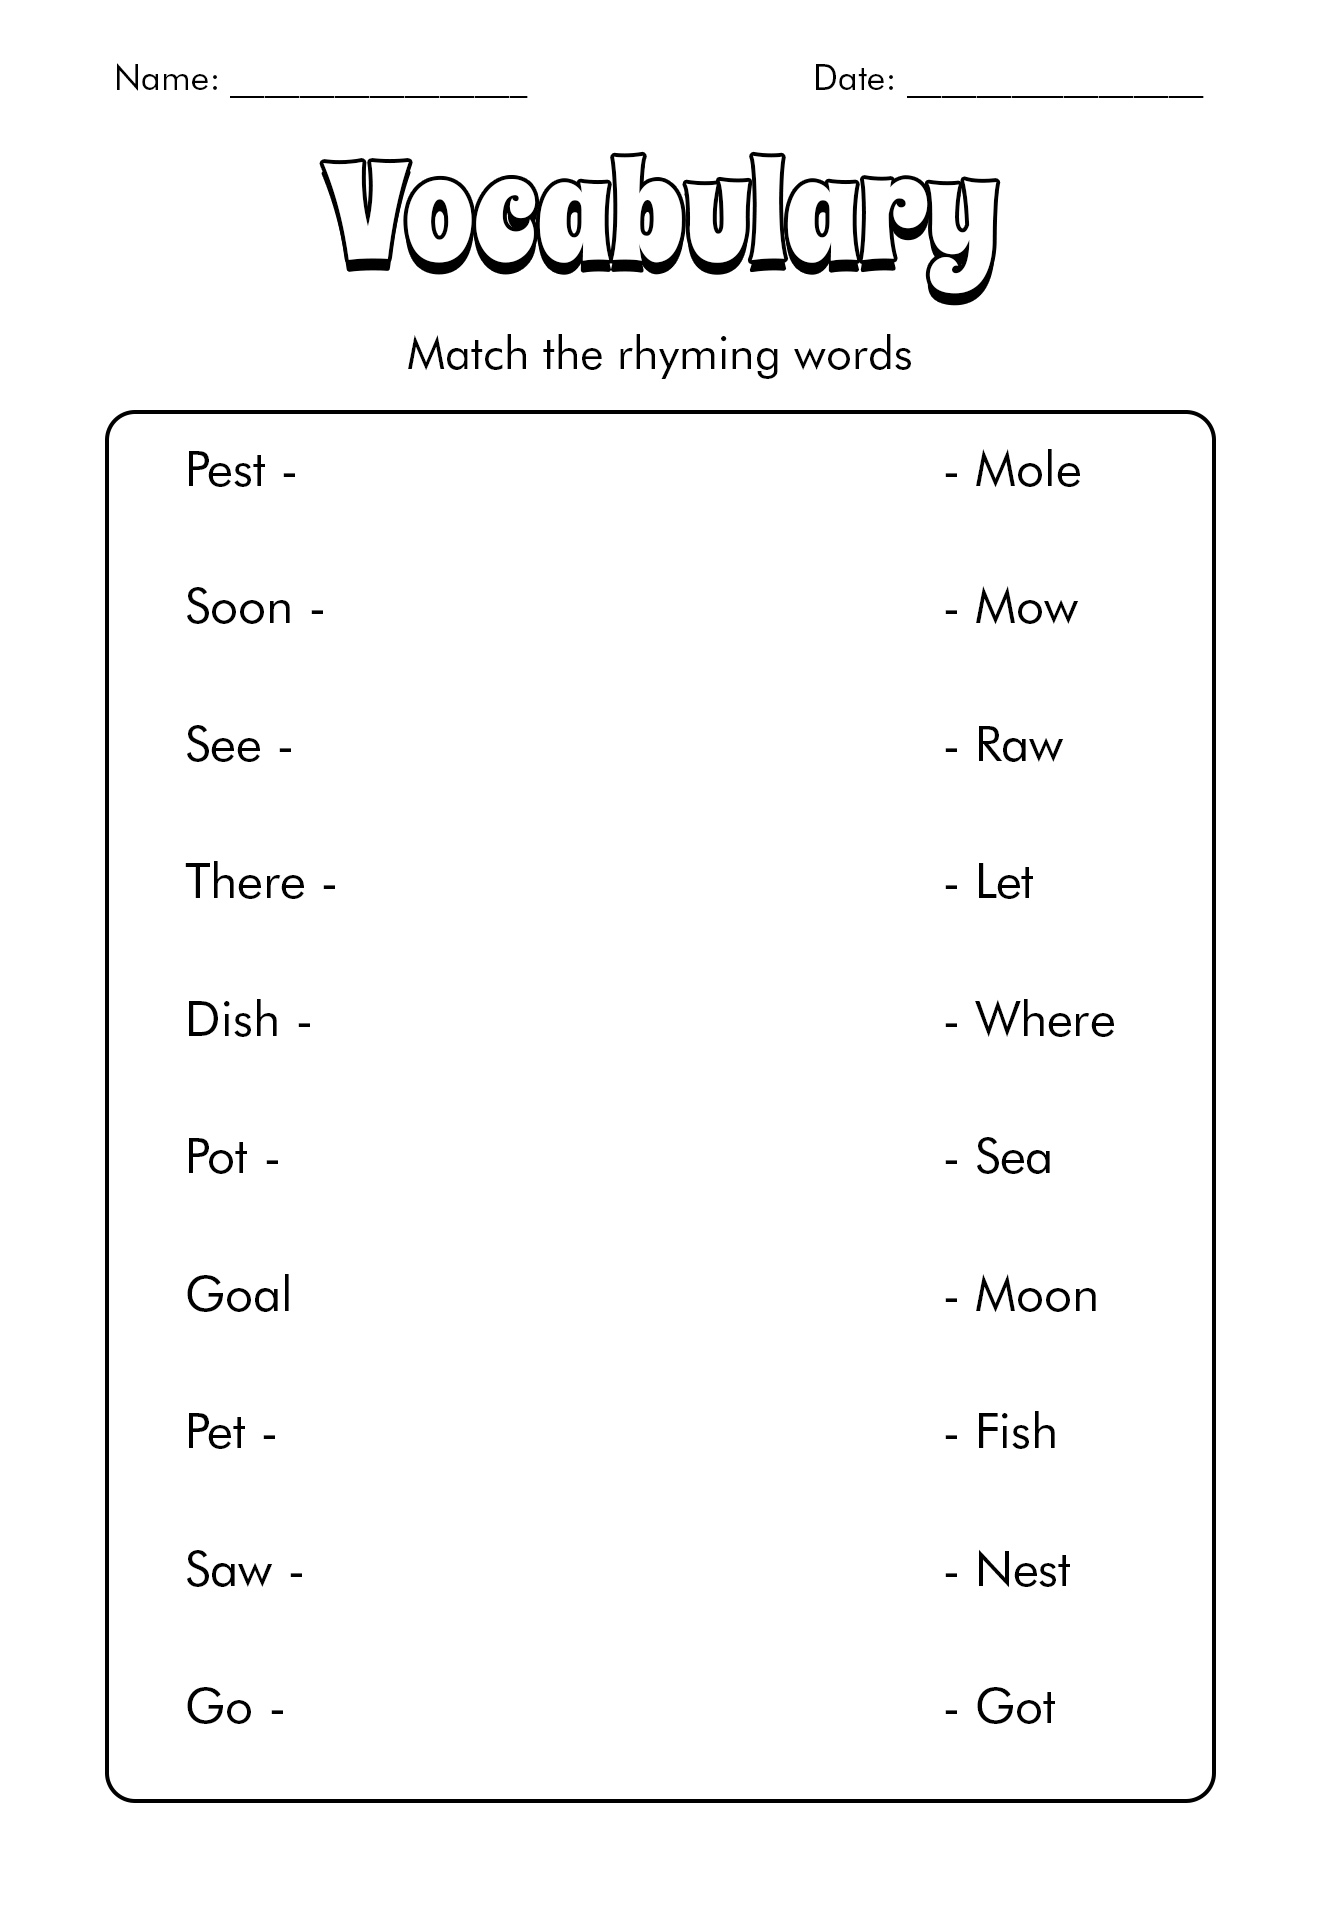 Vocabulary Matching Test Template